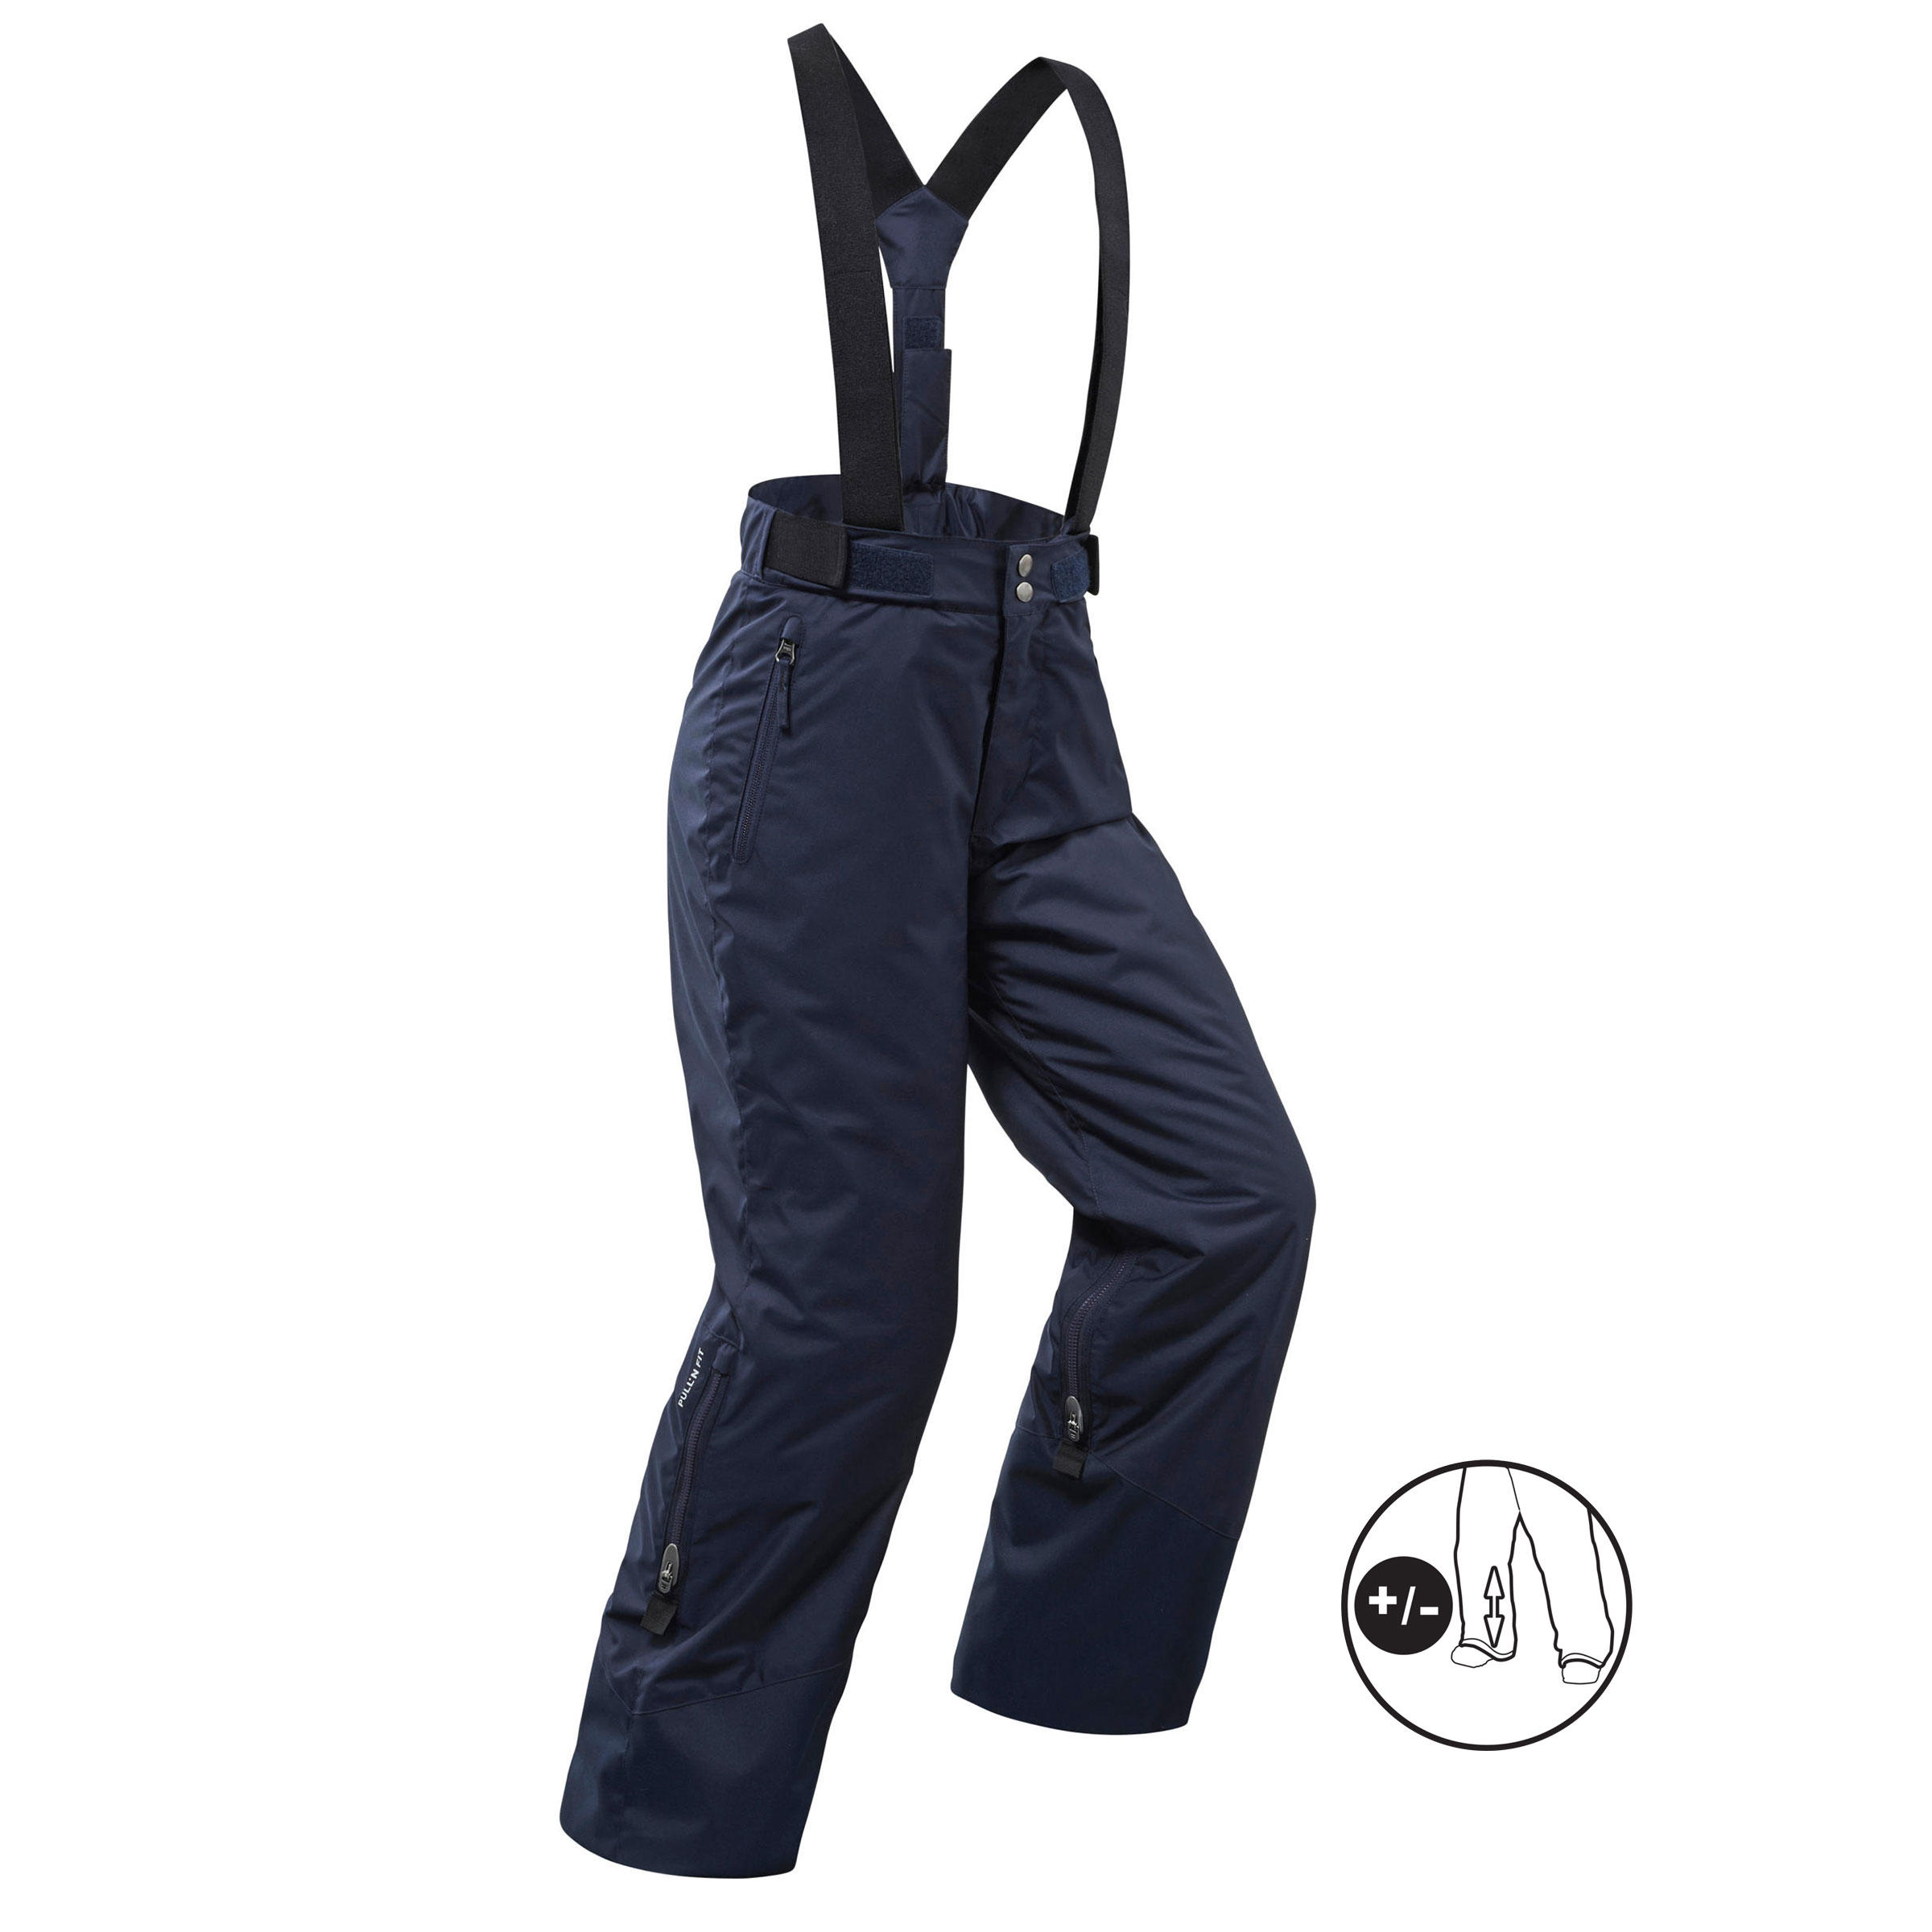 Pantalon călduros impermeabil schi PNF500 Bleumarin Fete decathlon.ro  Imbracaminte schi copii